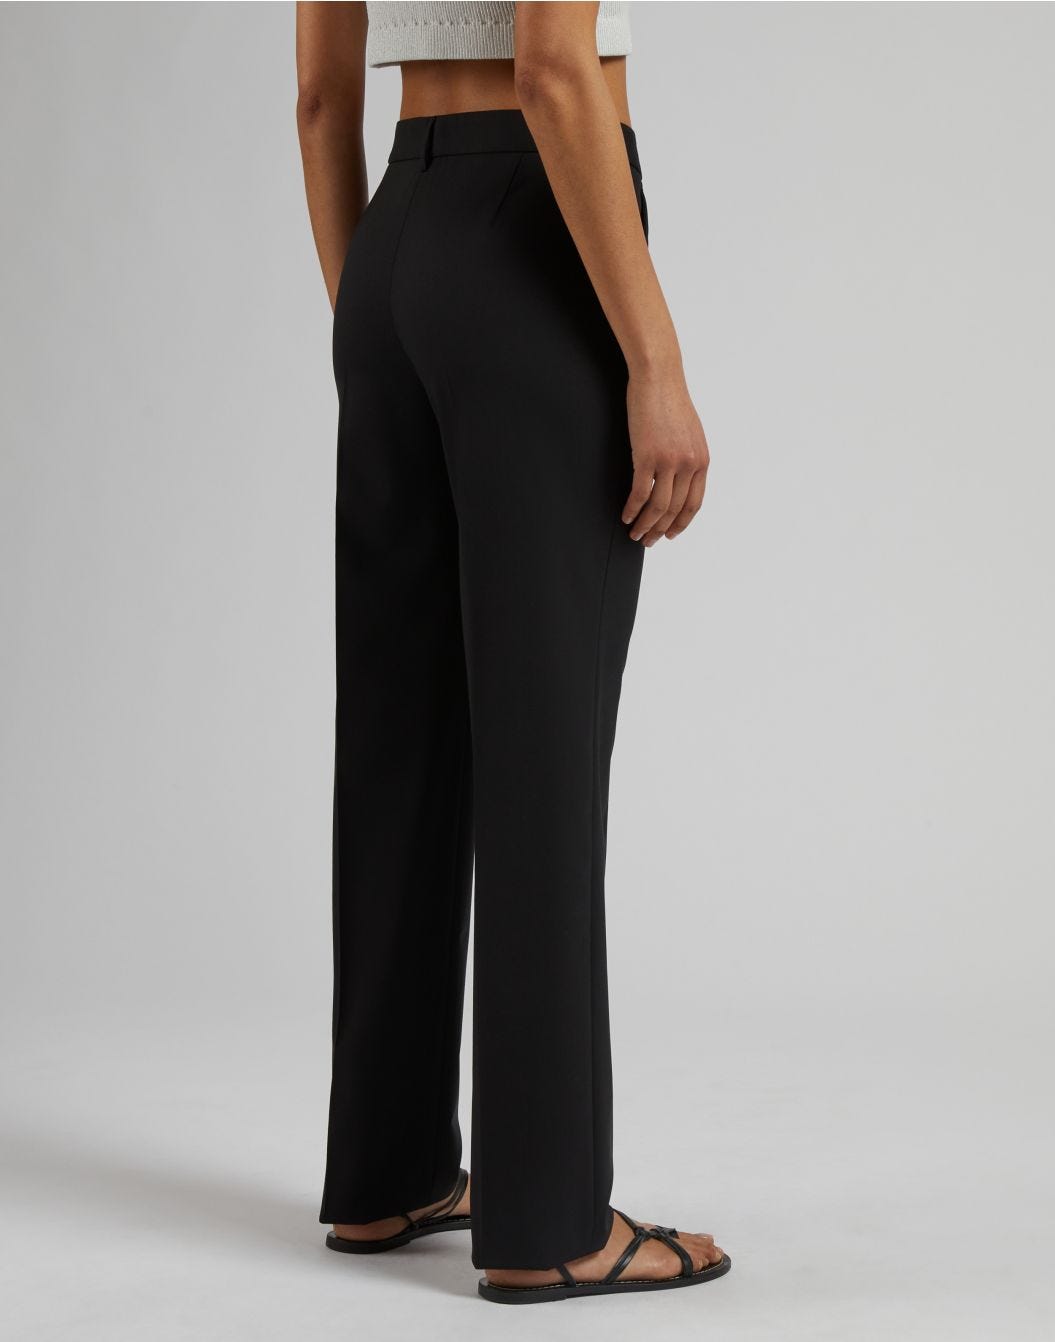 Black stretch wool fabric regular straight-leg trousers